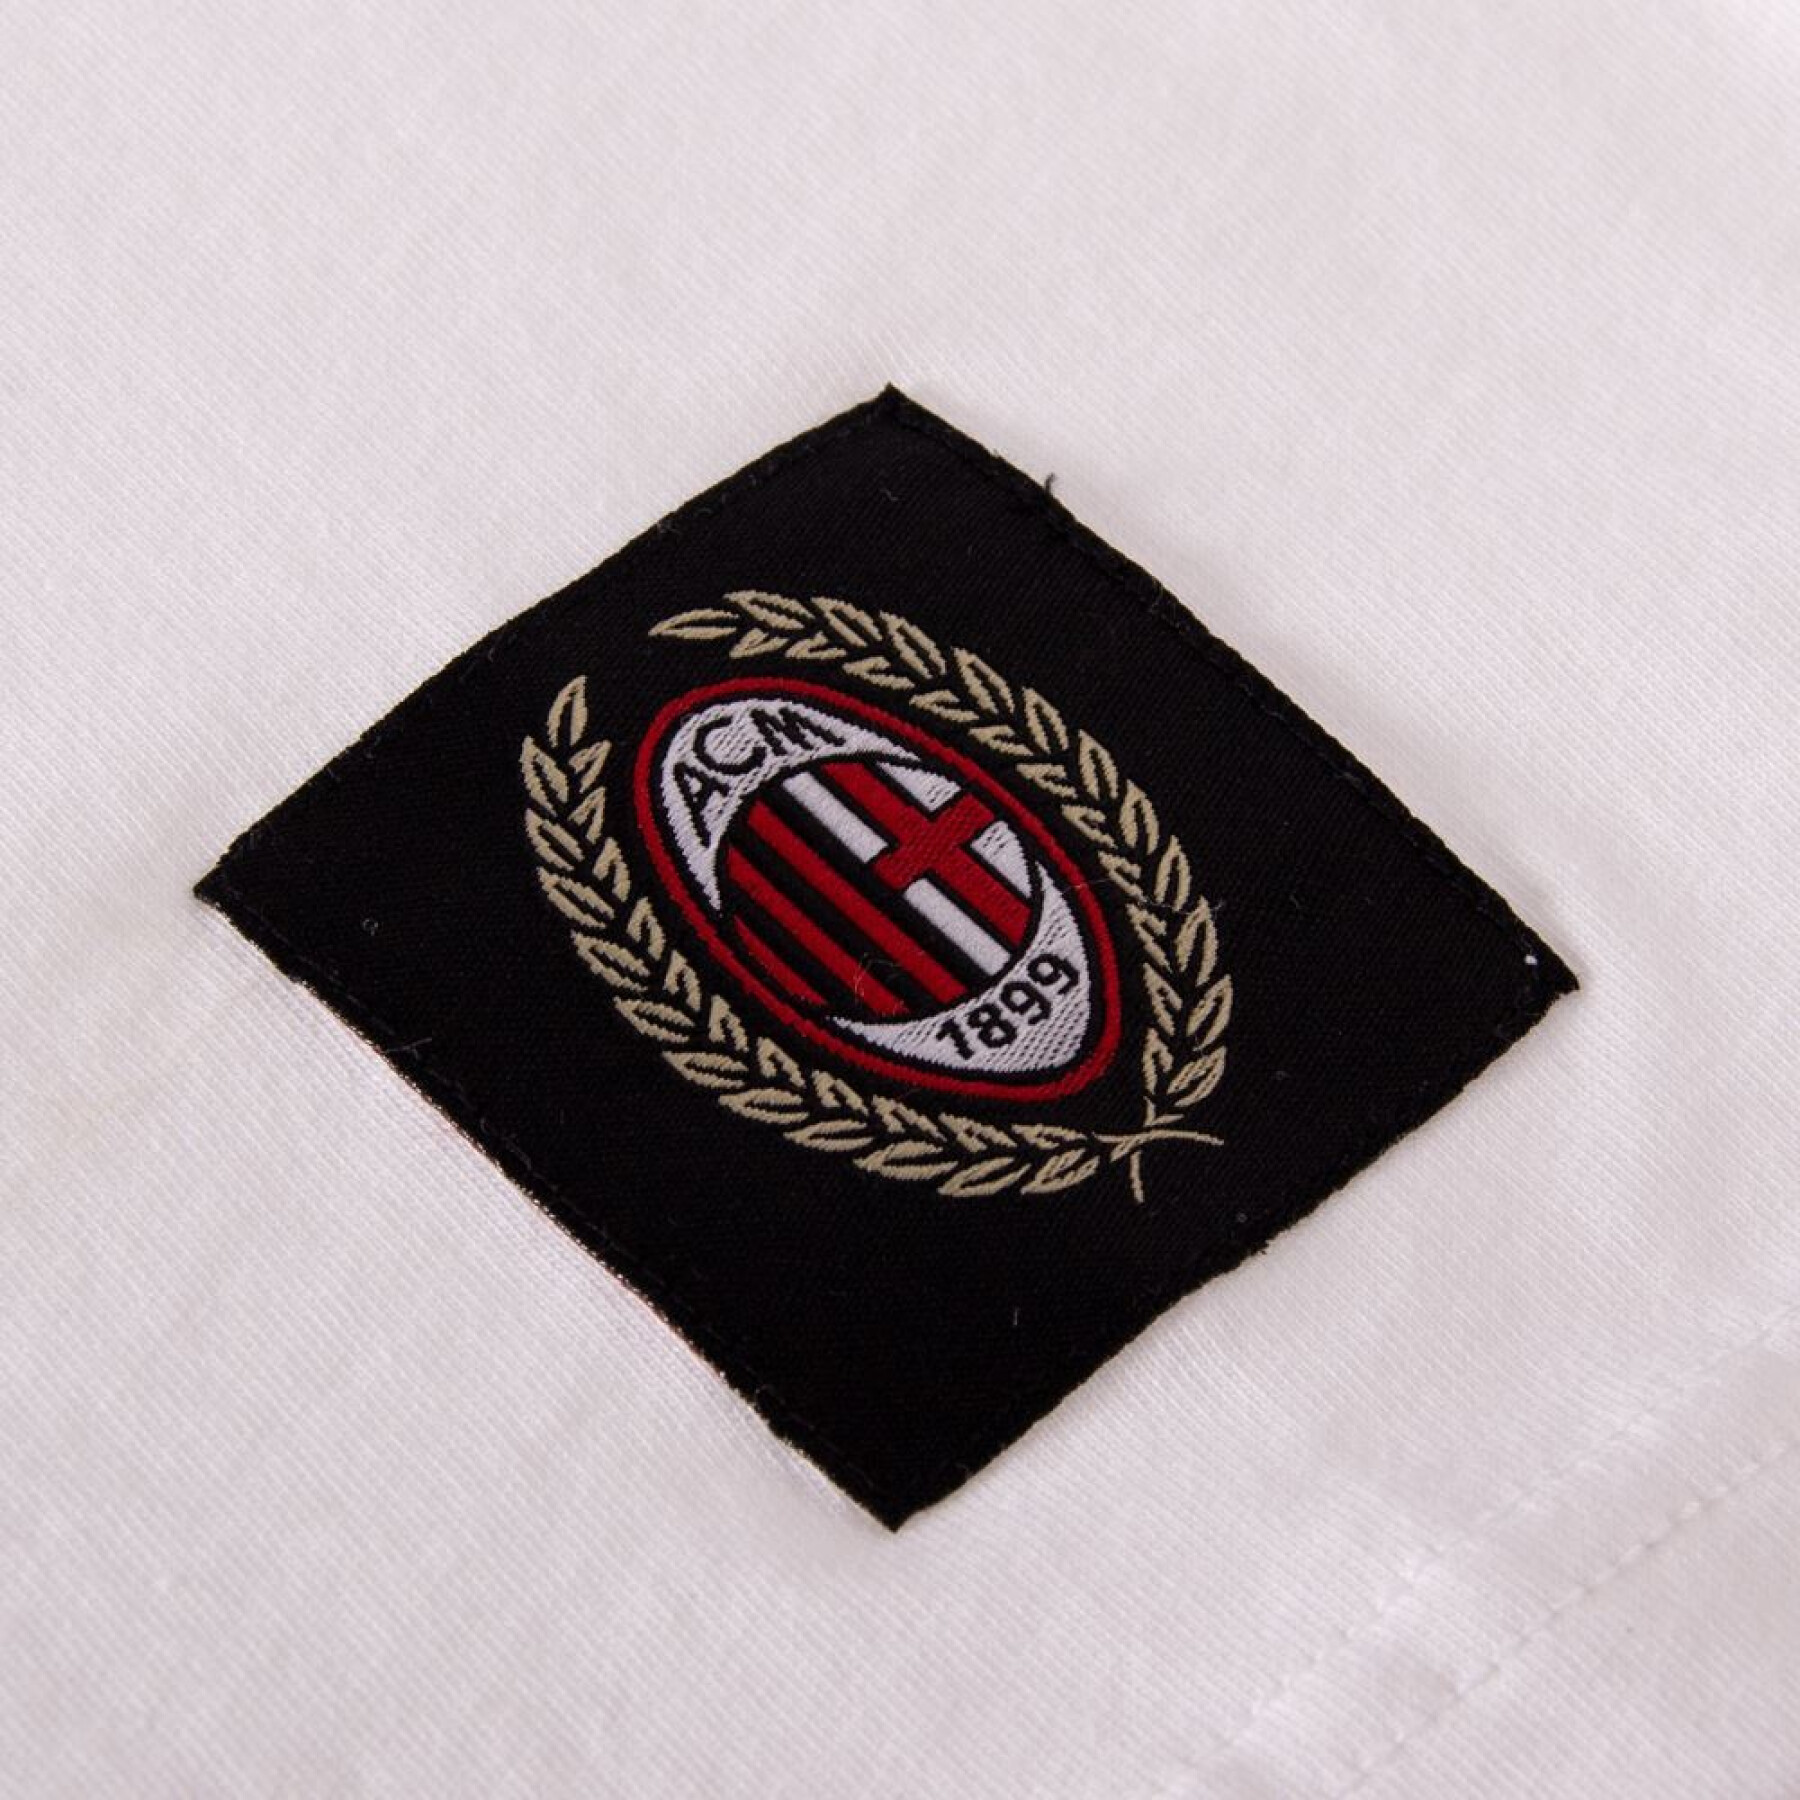 T-shirt de l'équipe Milan AC CL 2003/04